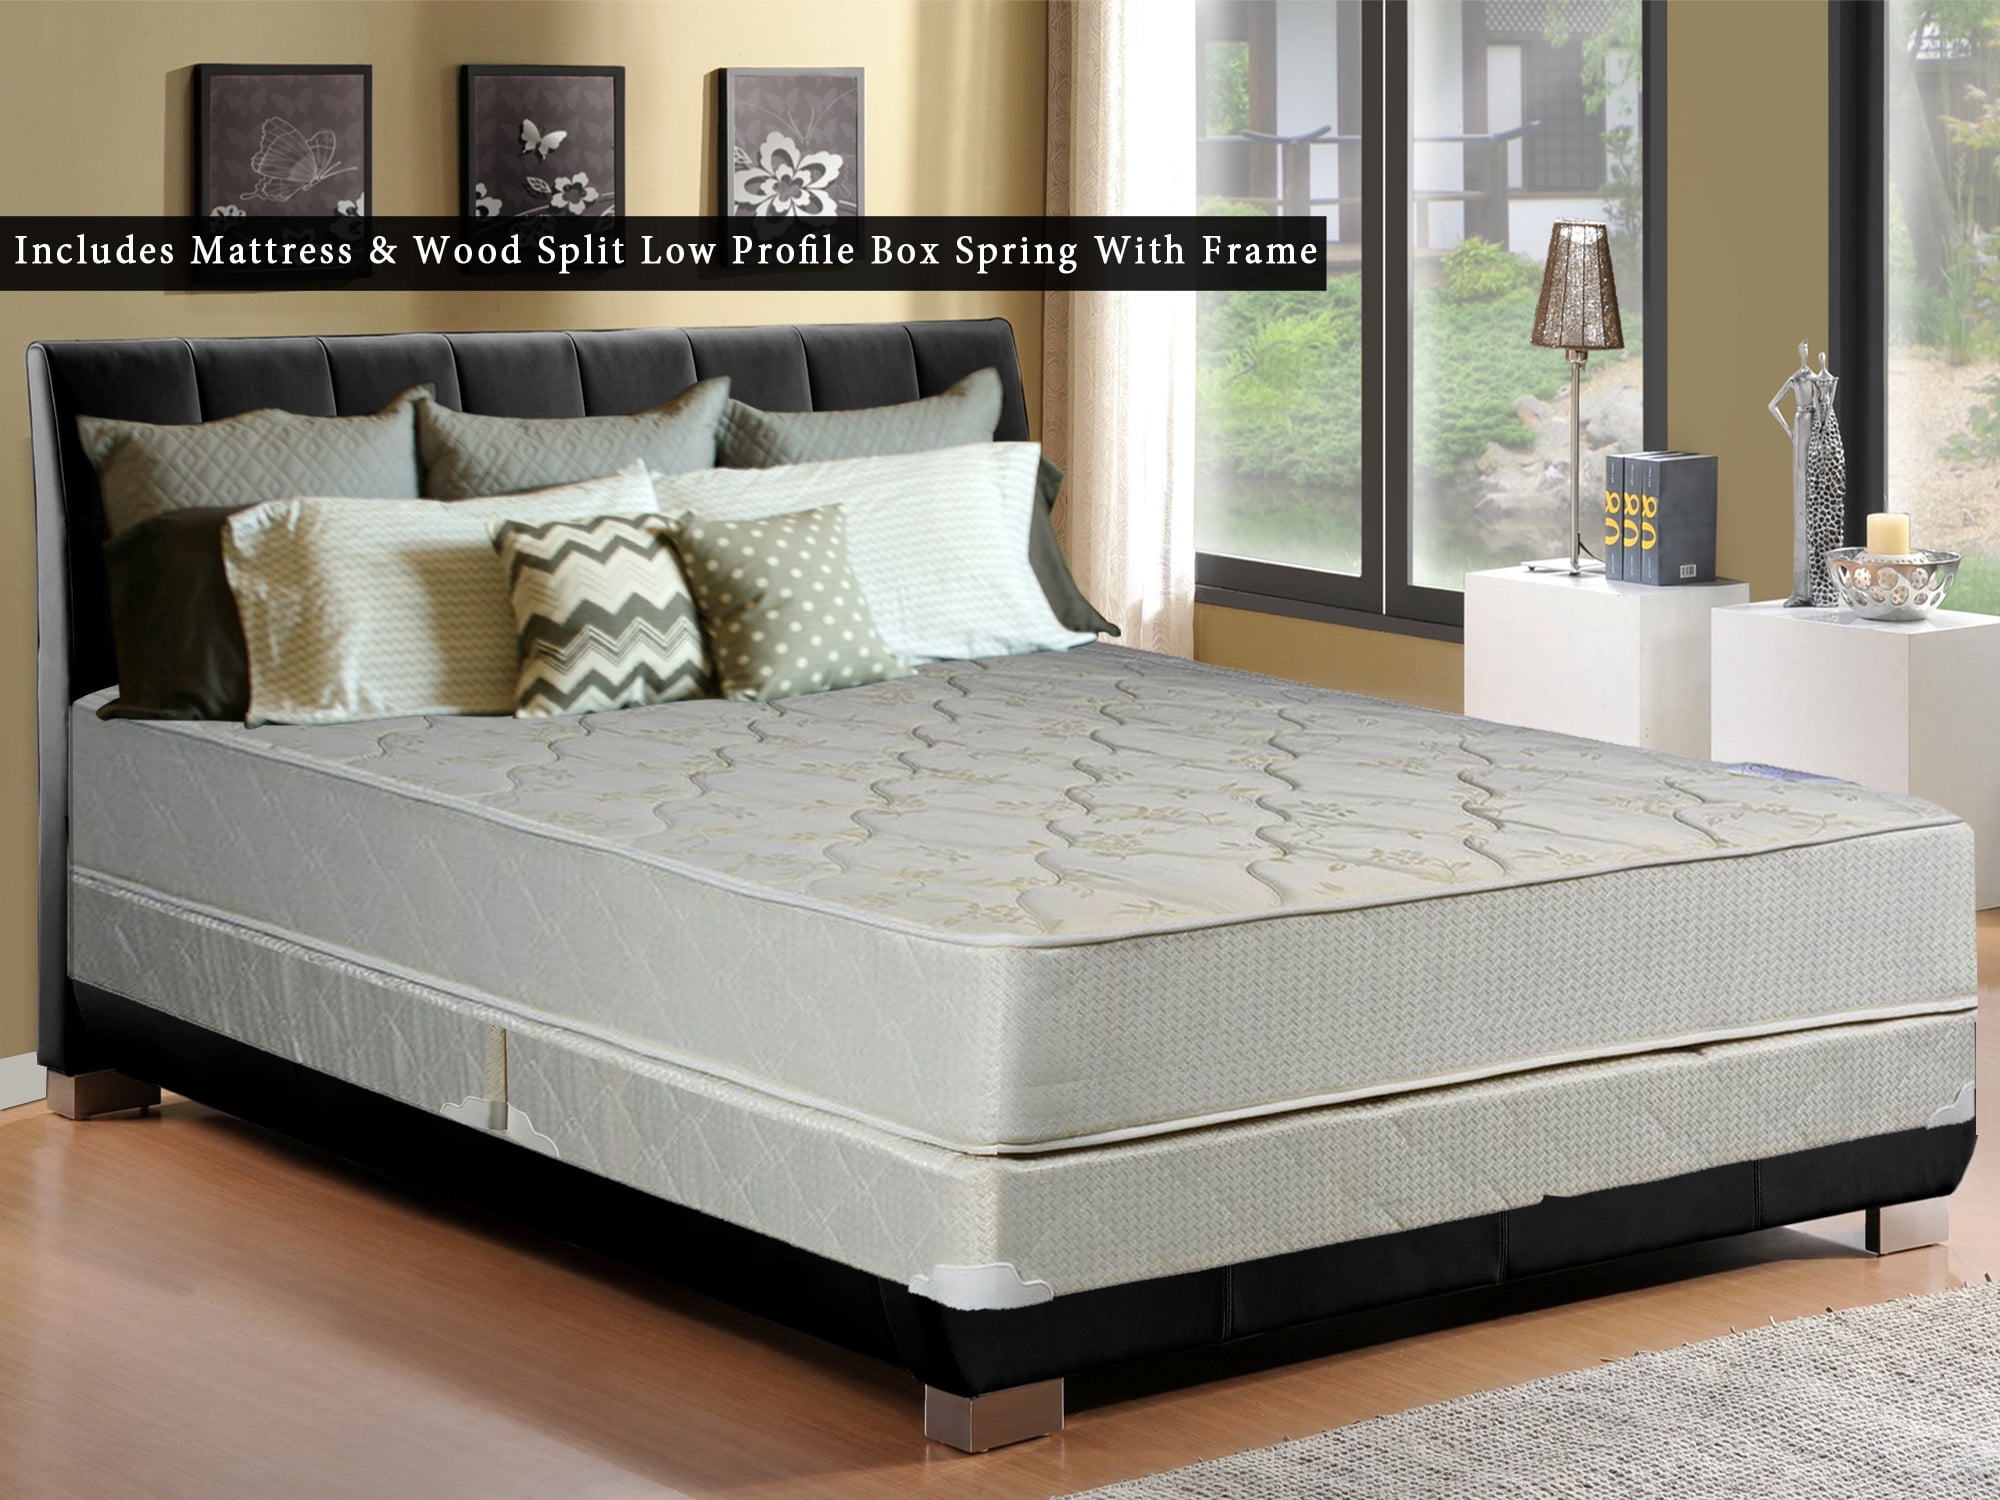 sleepys mattress and box spring